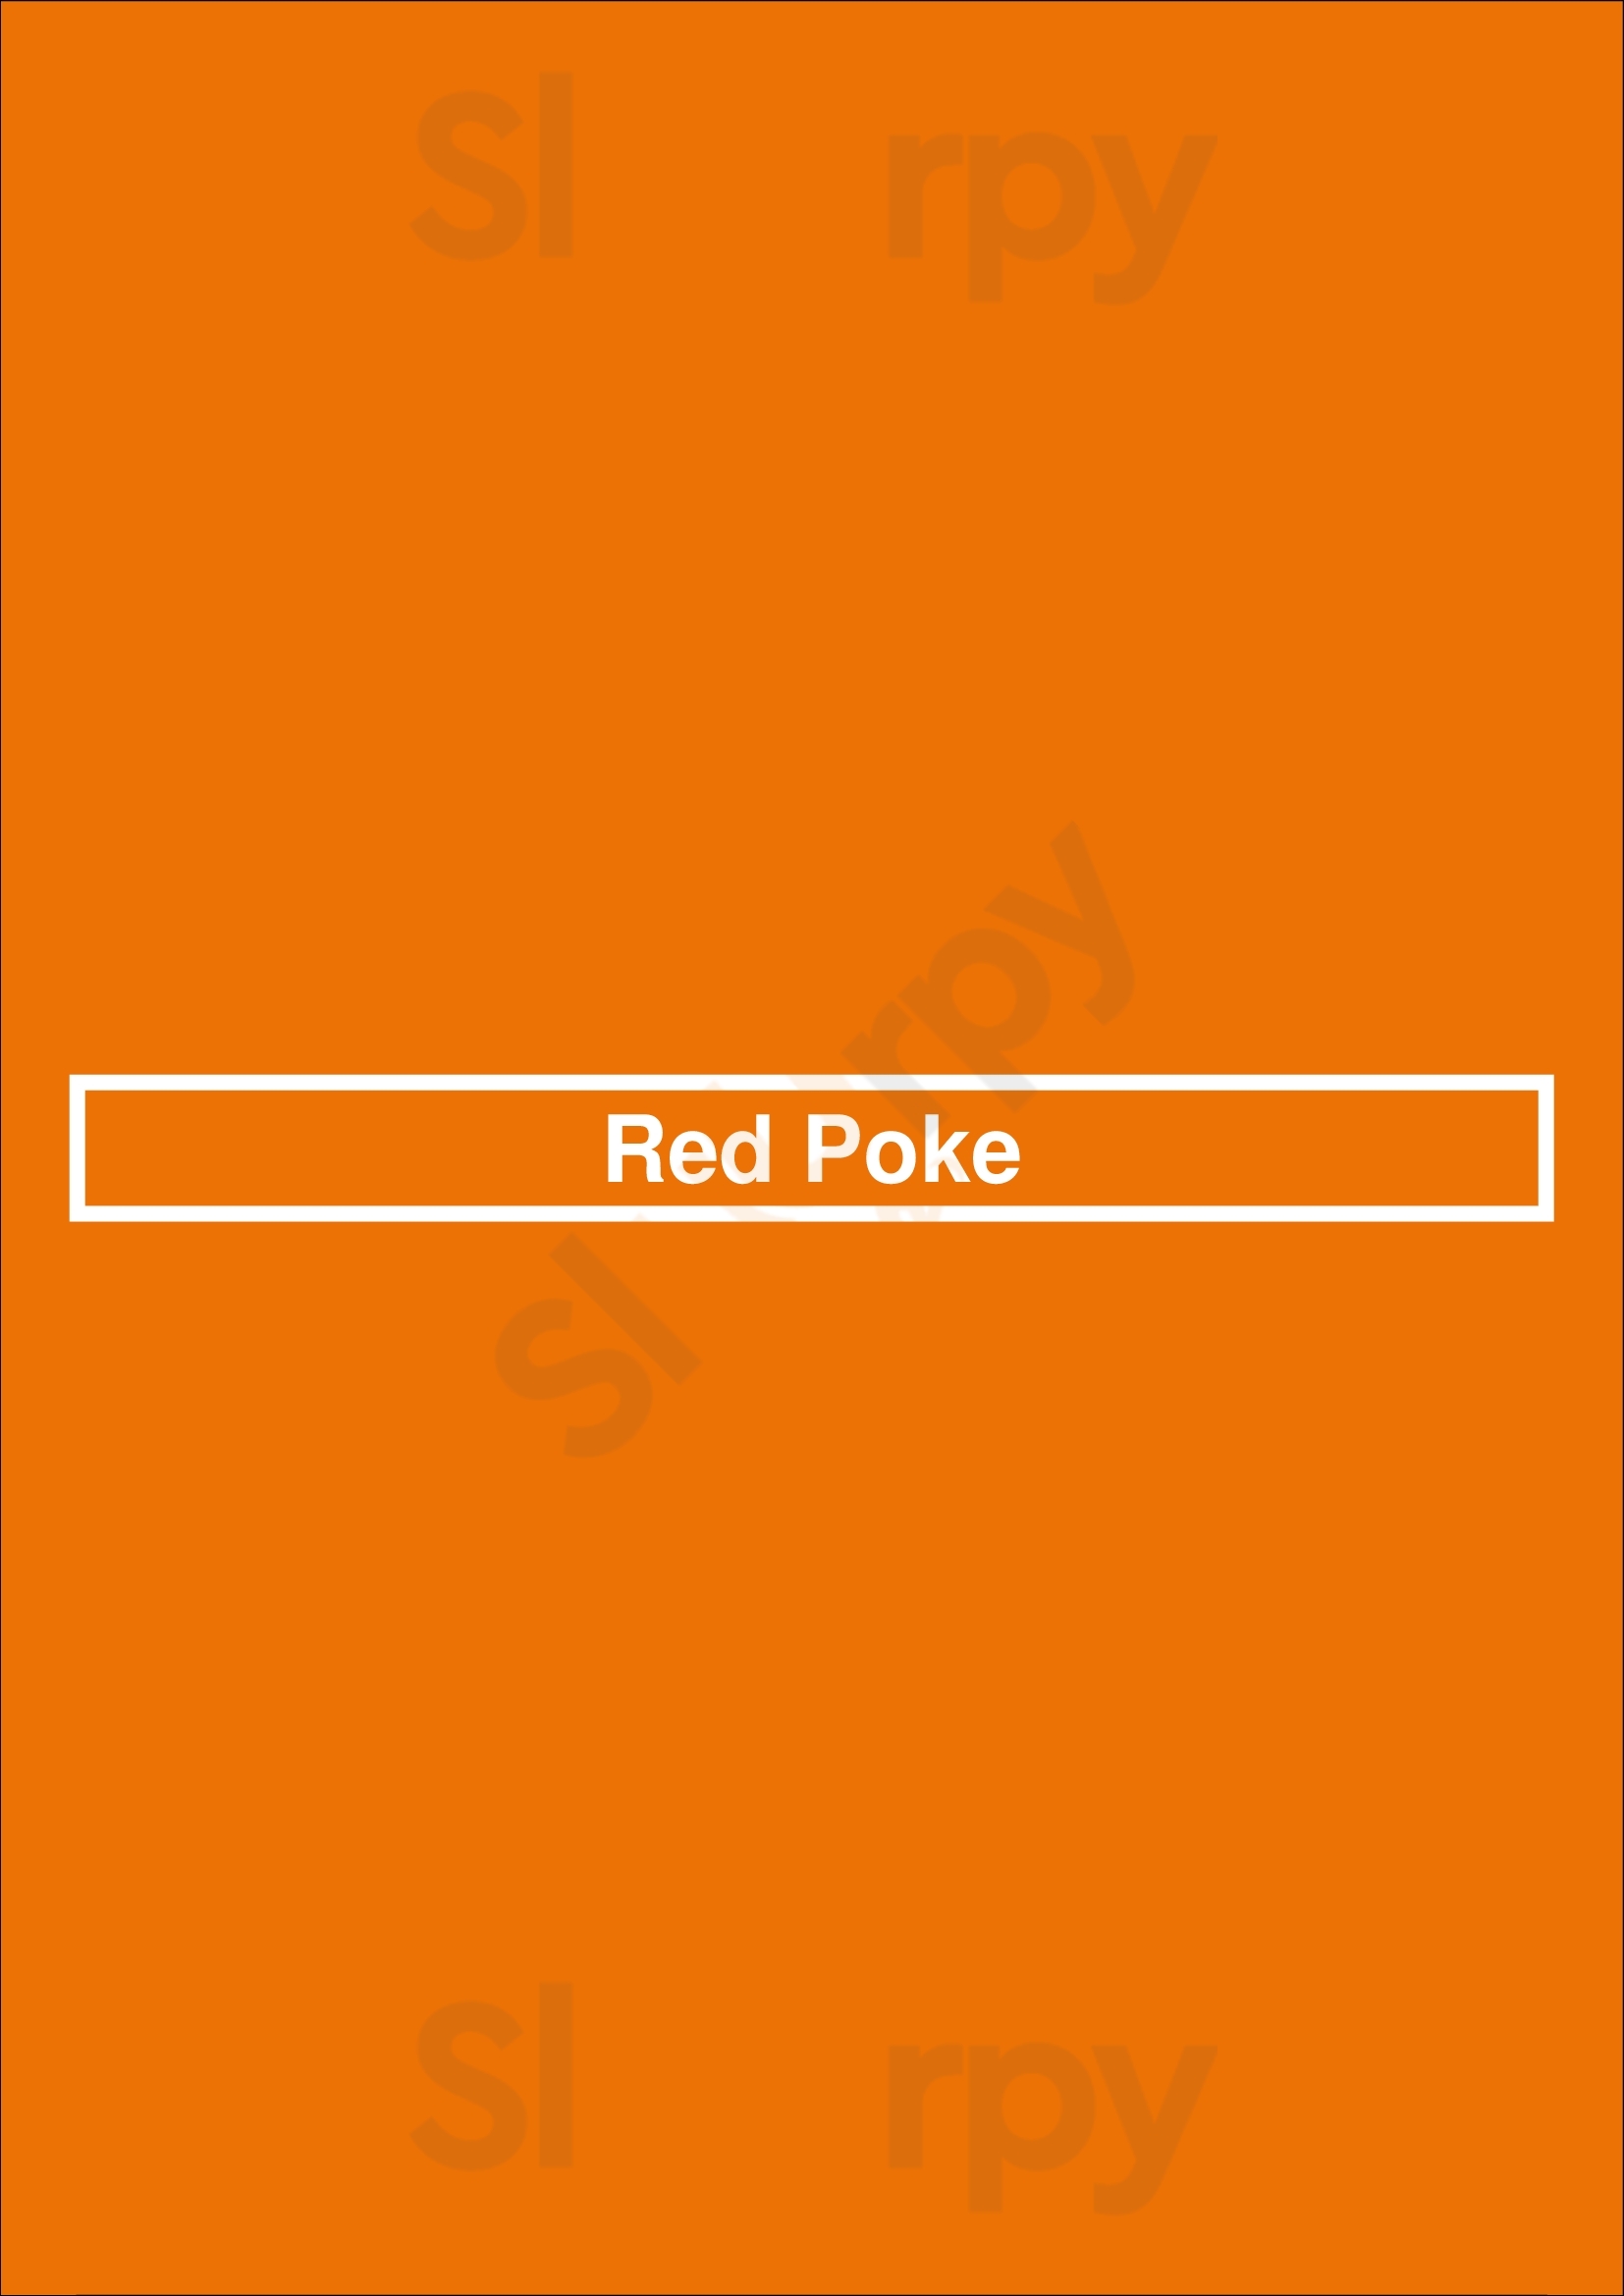 Red Poke New York City Menu - 1